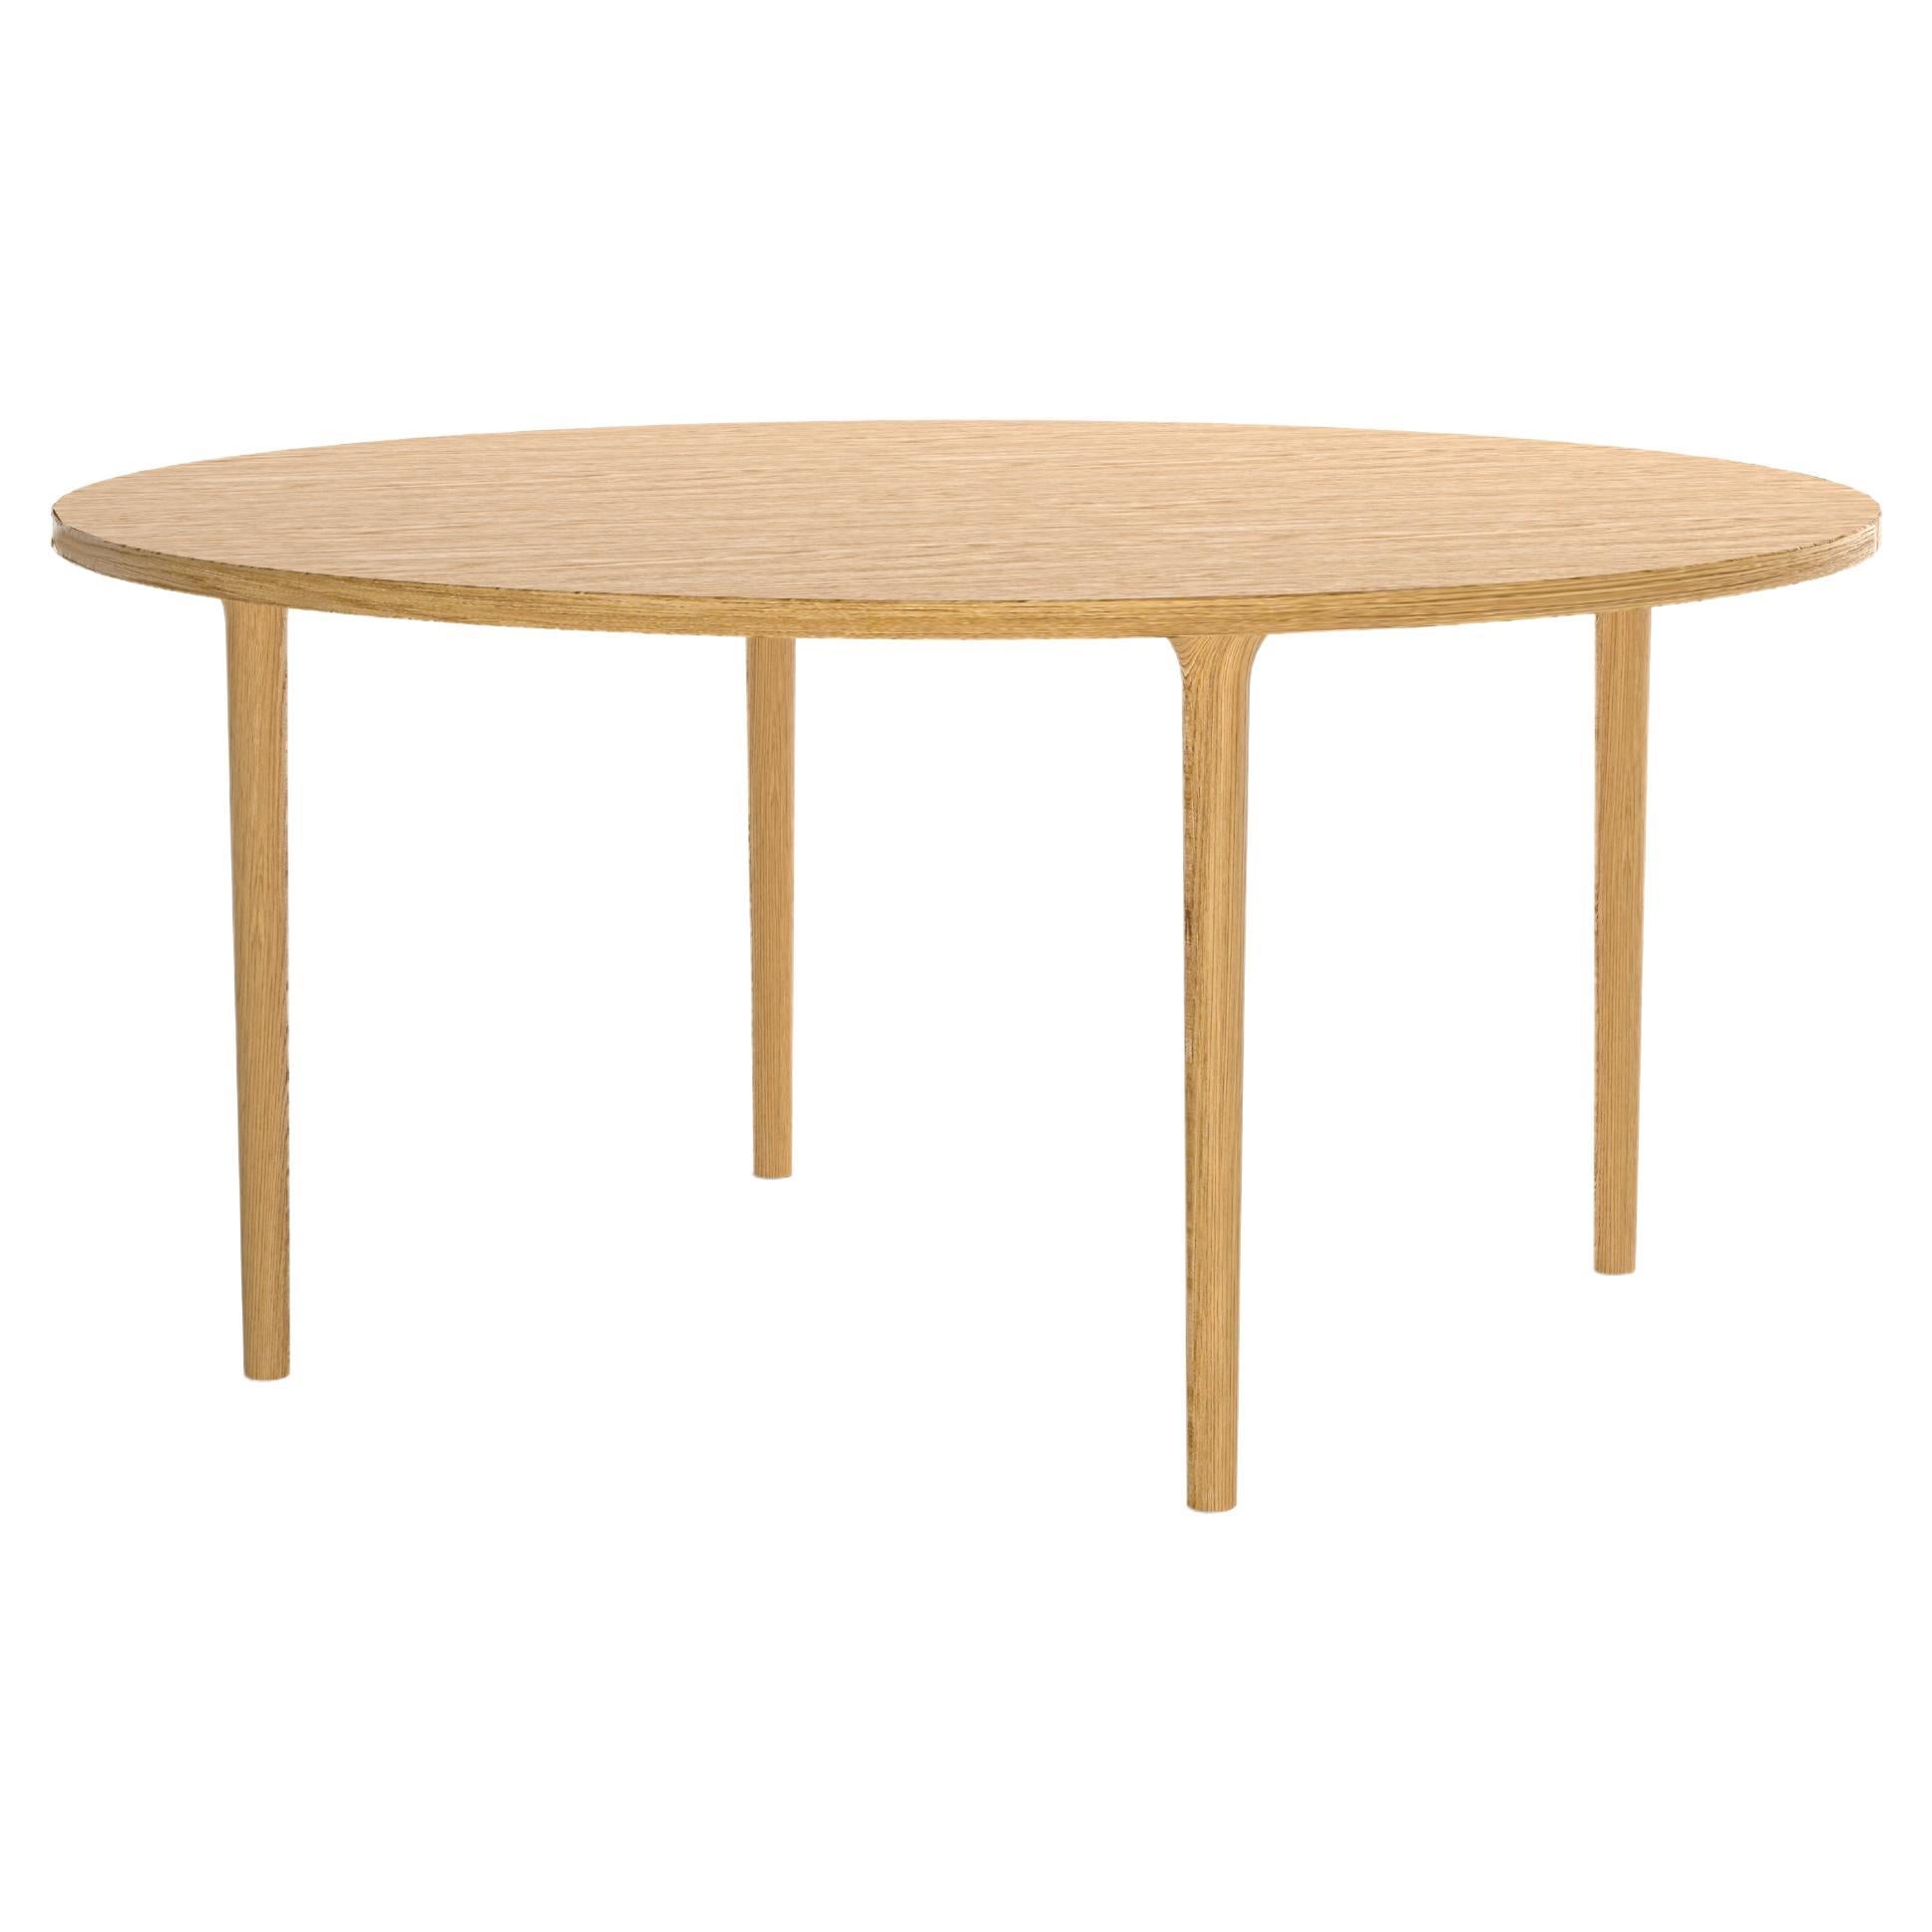 Table moderne minimaliste ronde en bois de chêne 160 cm